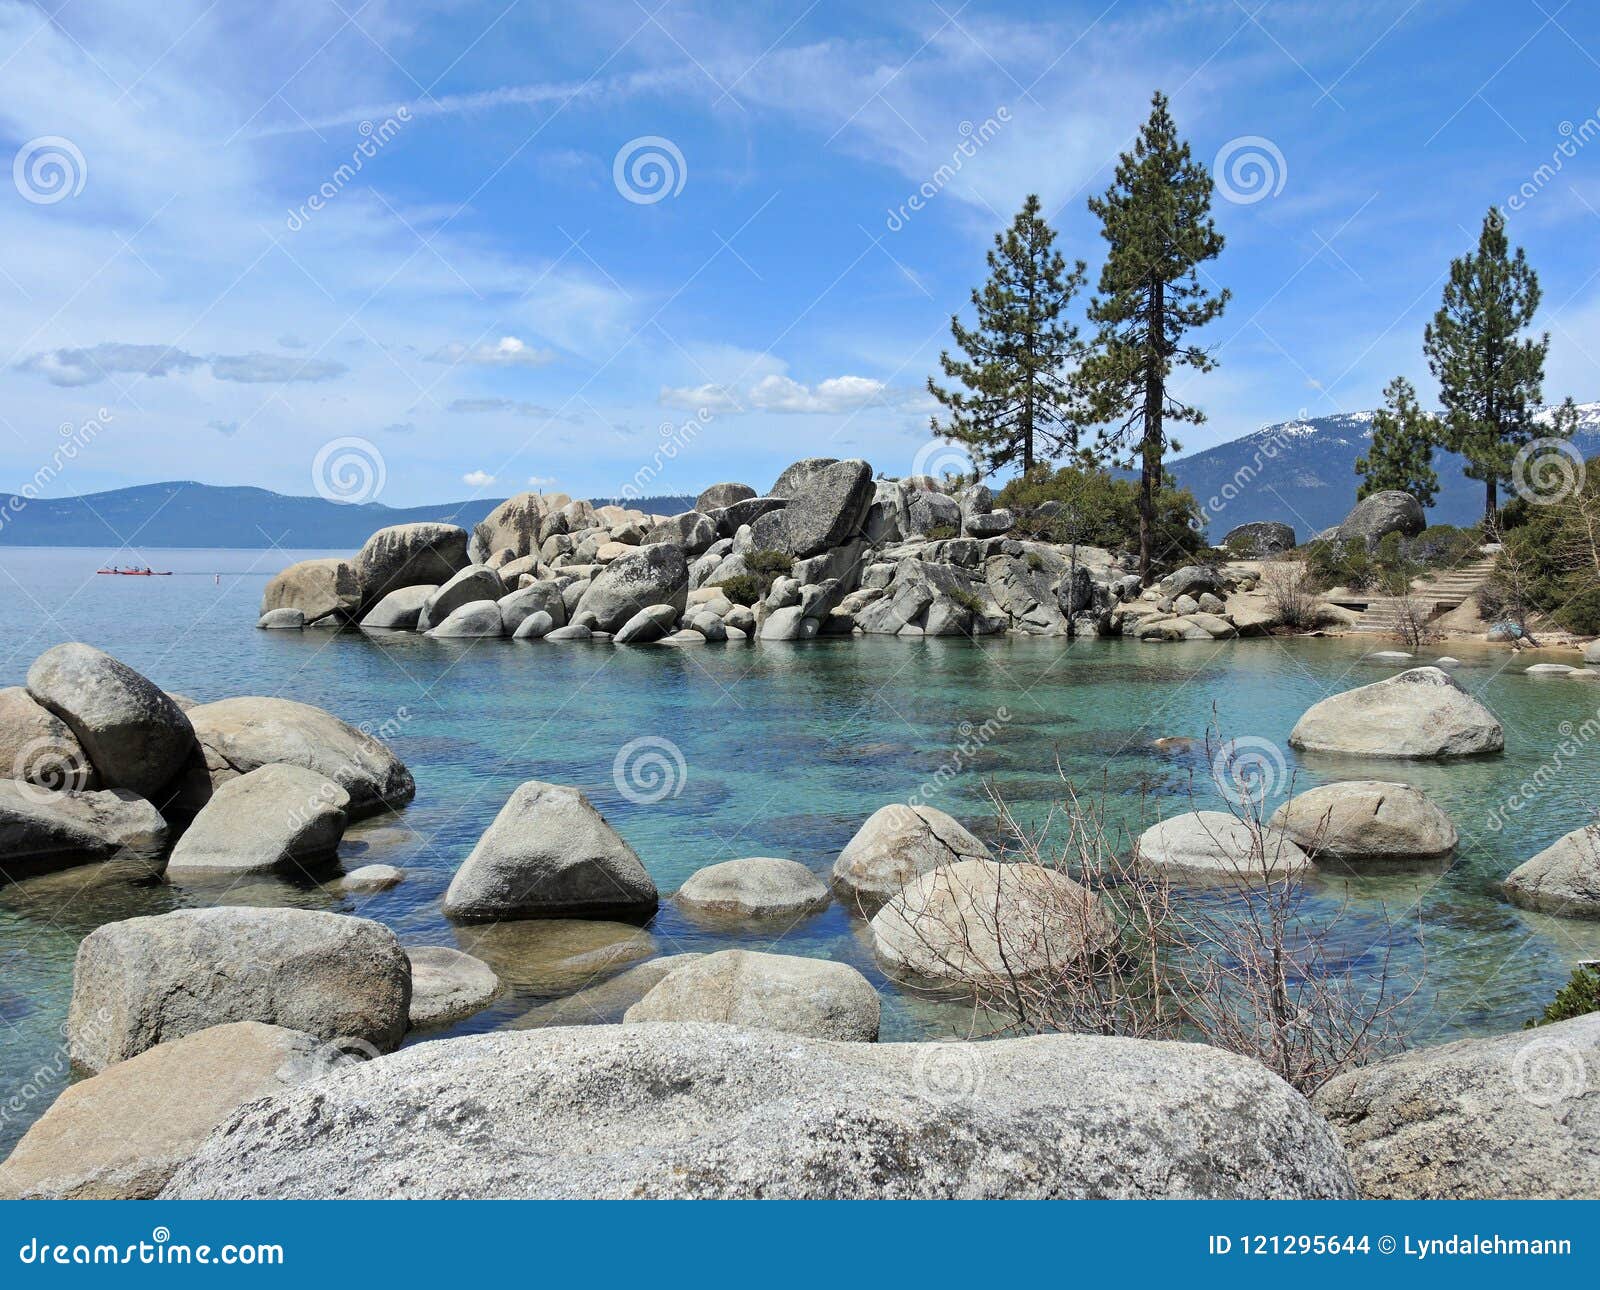 boulder strewn water at sand beach on lake tahoe